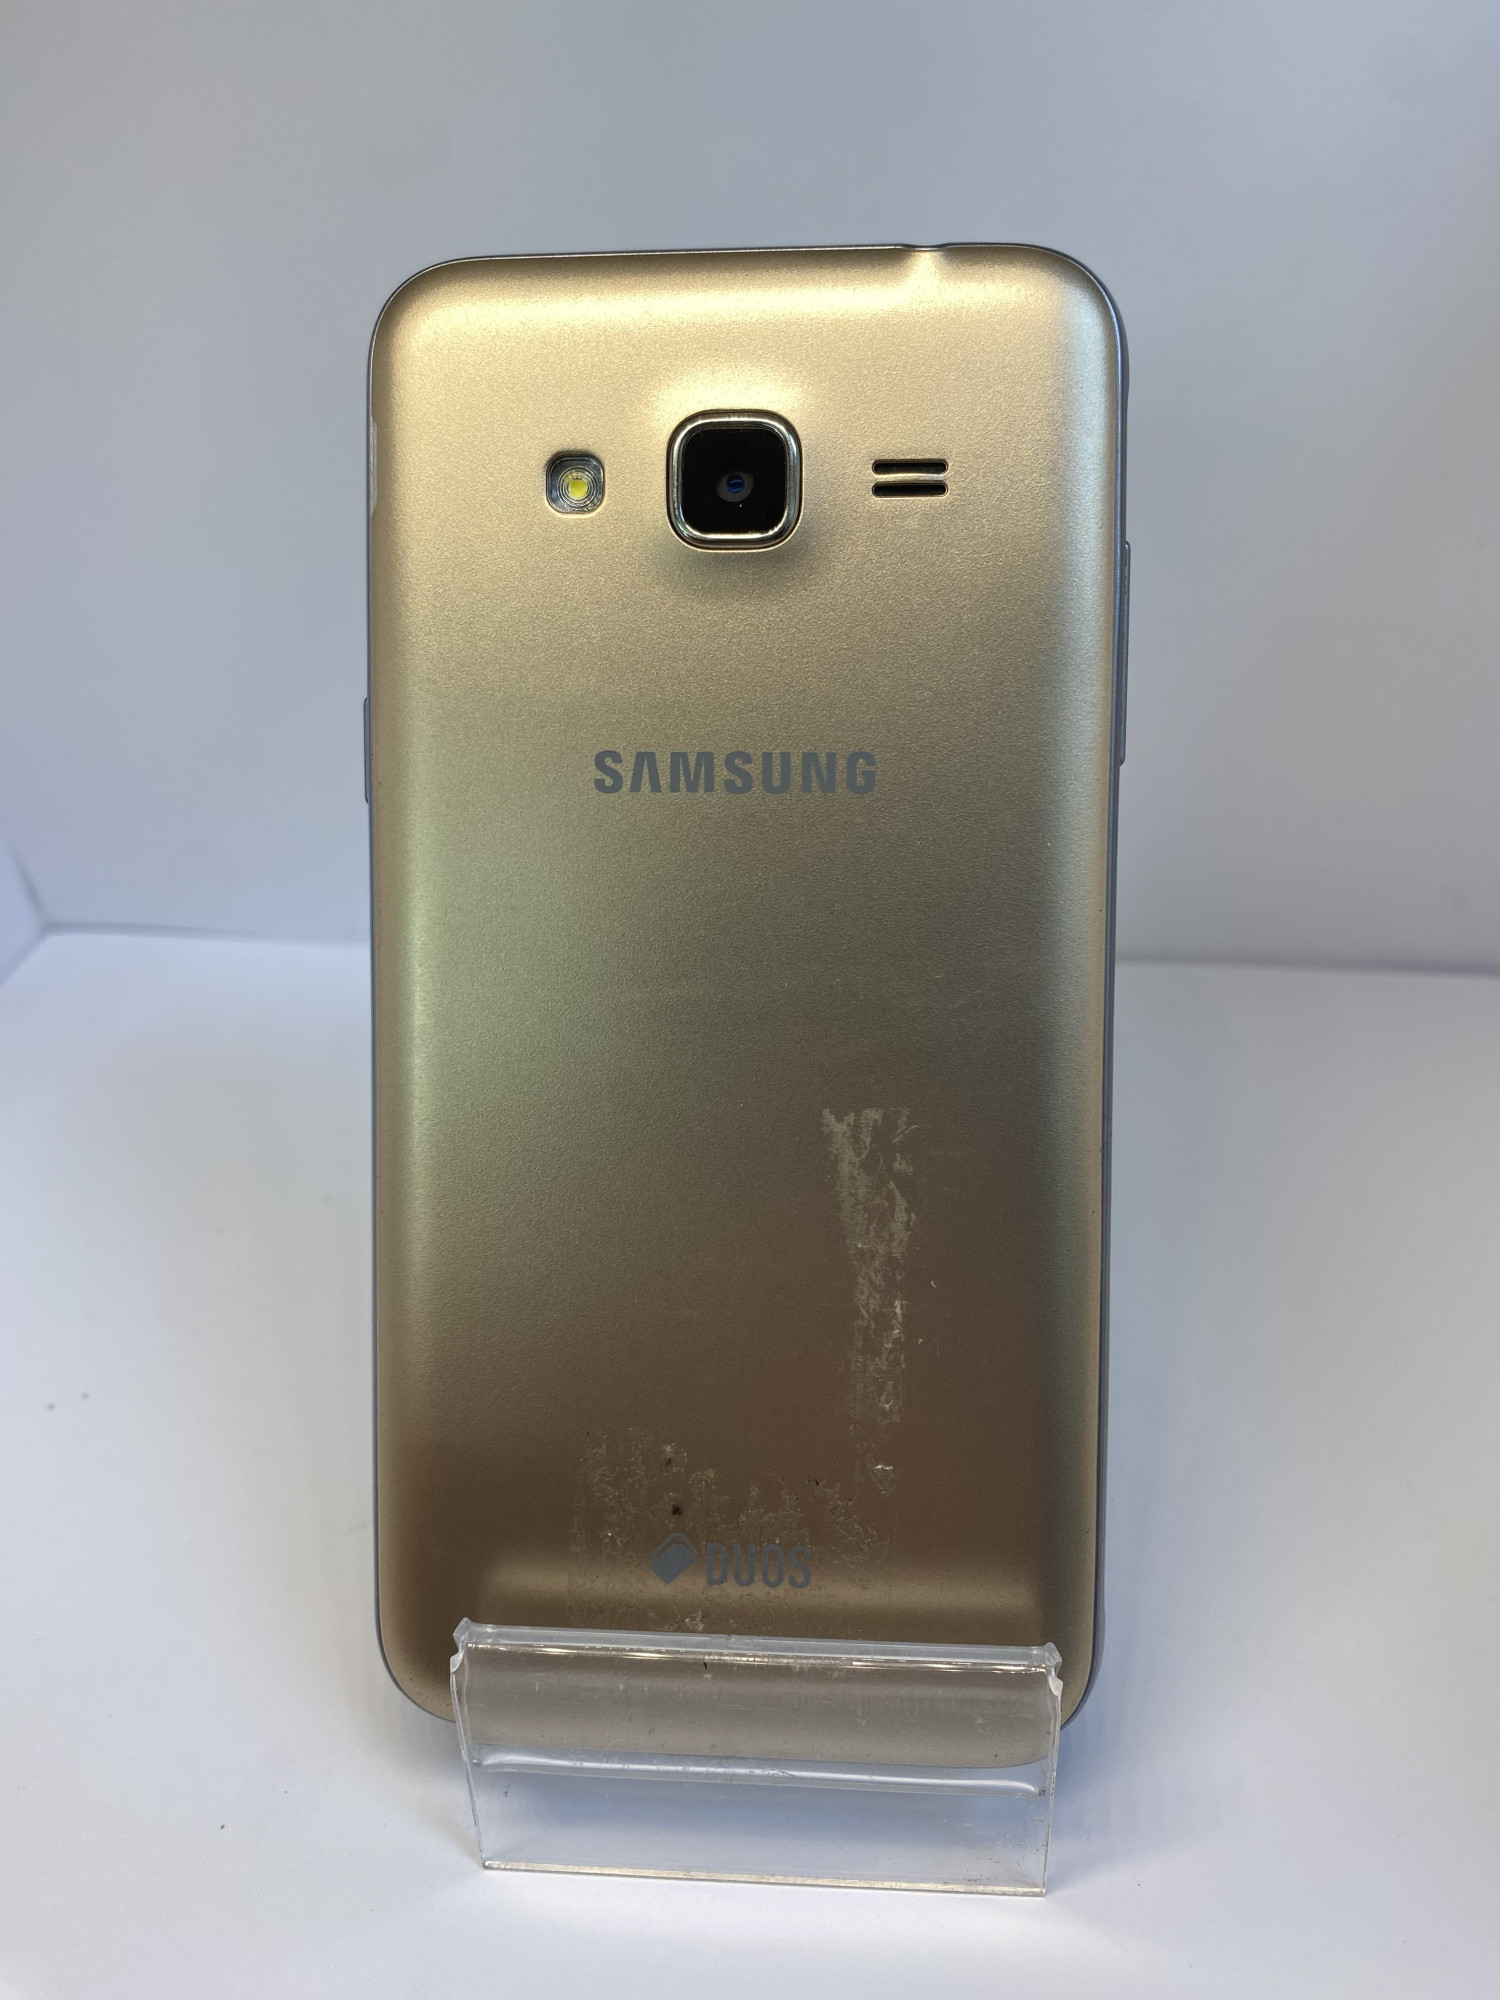 Samsung Galaxy J3 2016 Gold (SM-J320HZDD) 1/8Gb 3